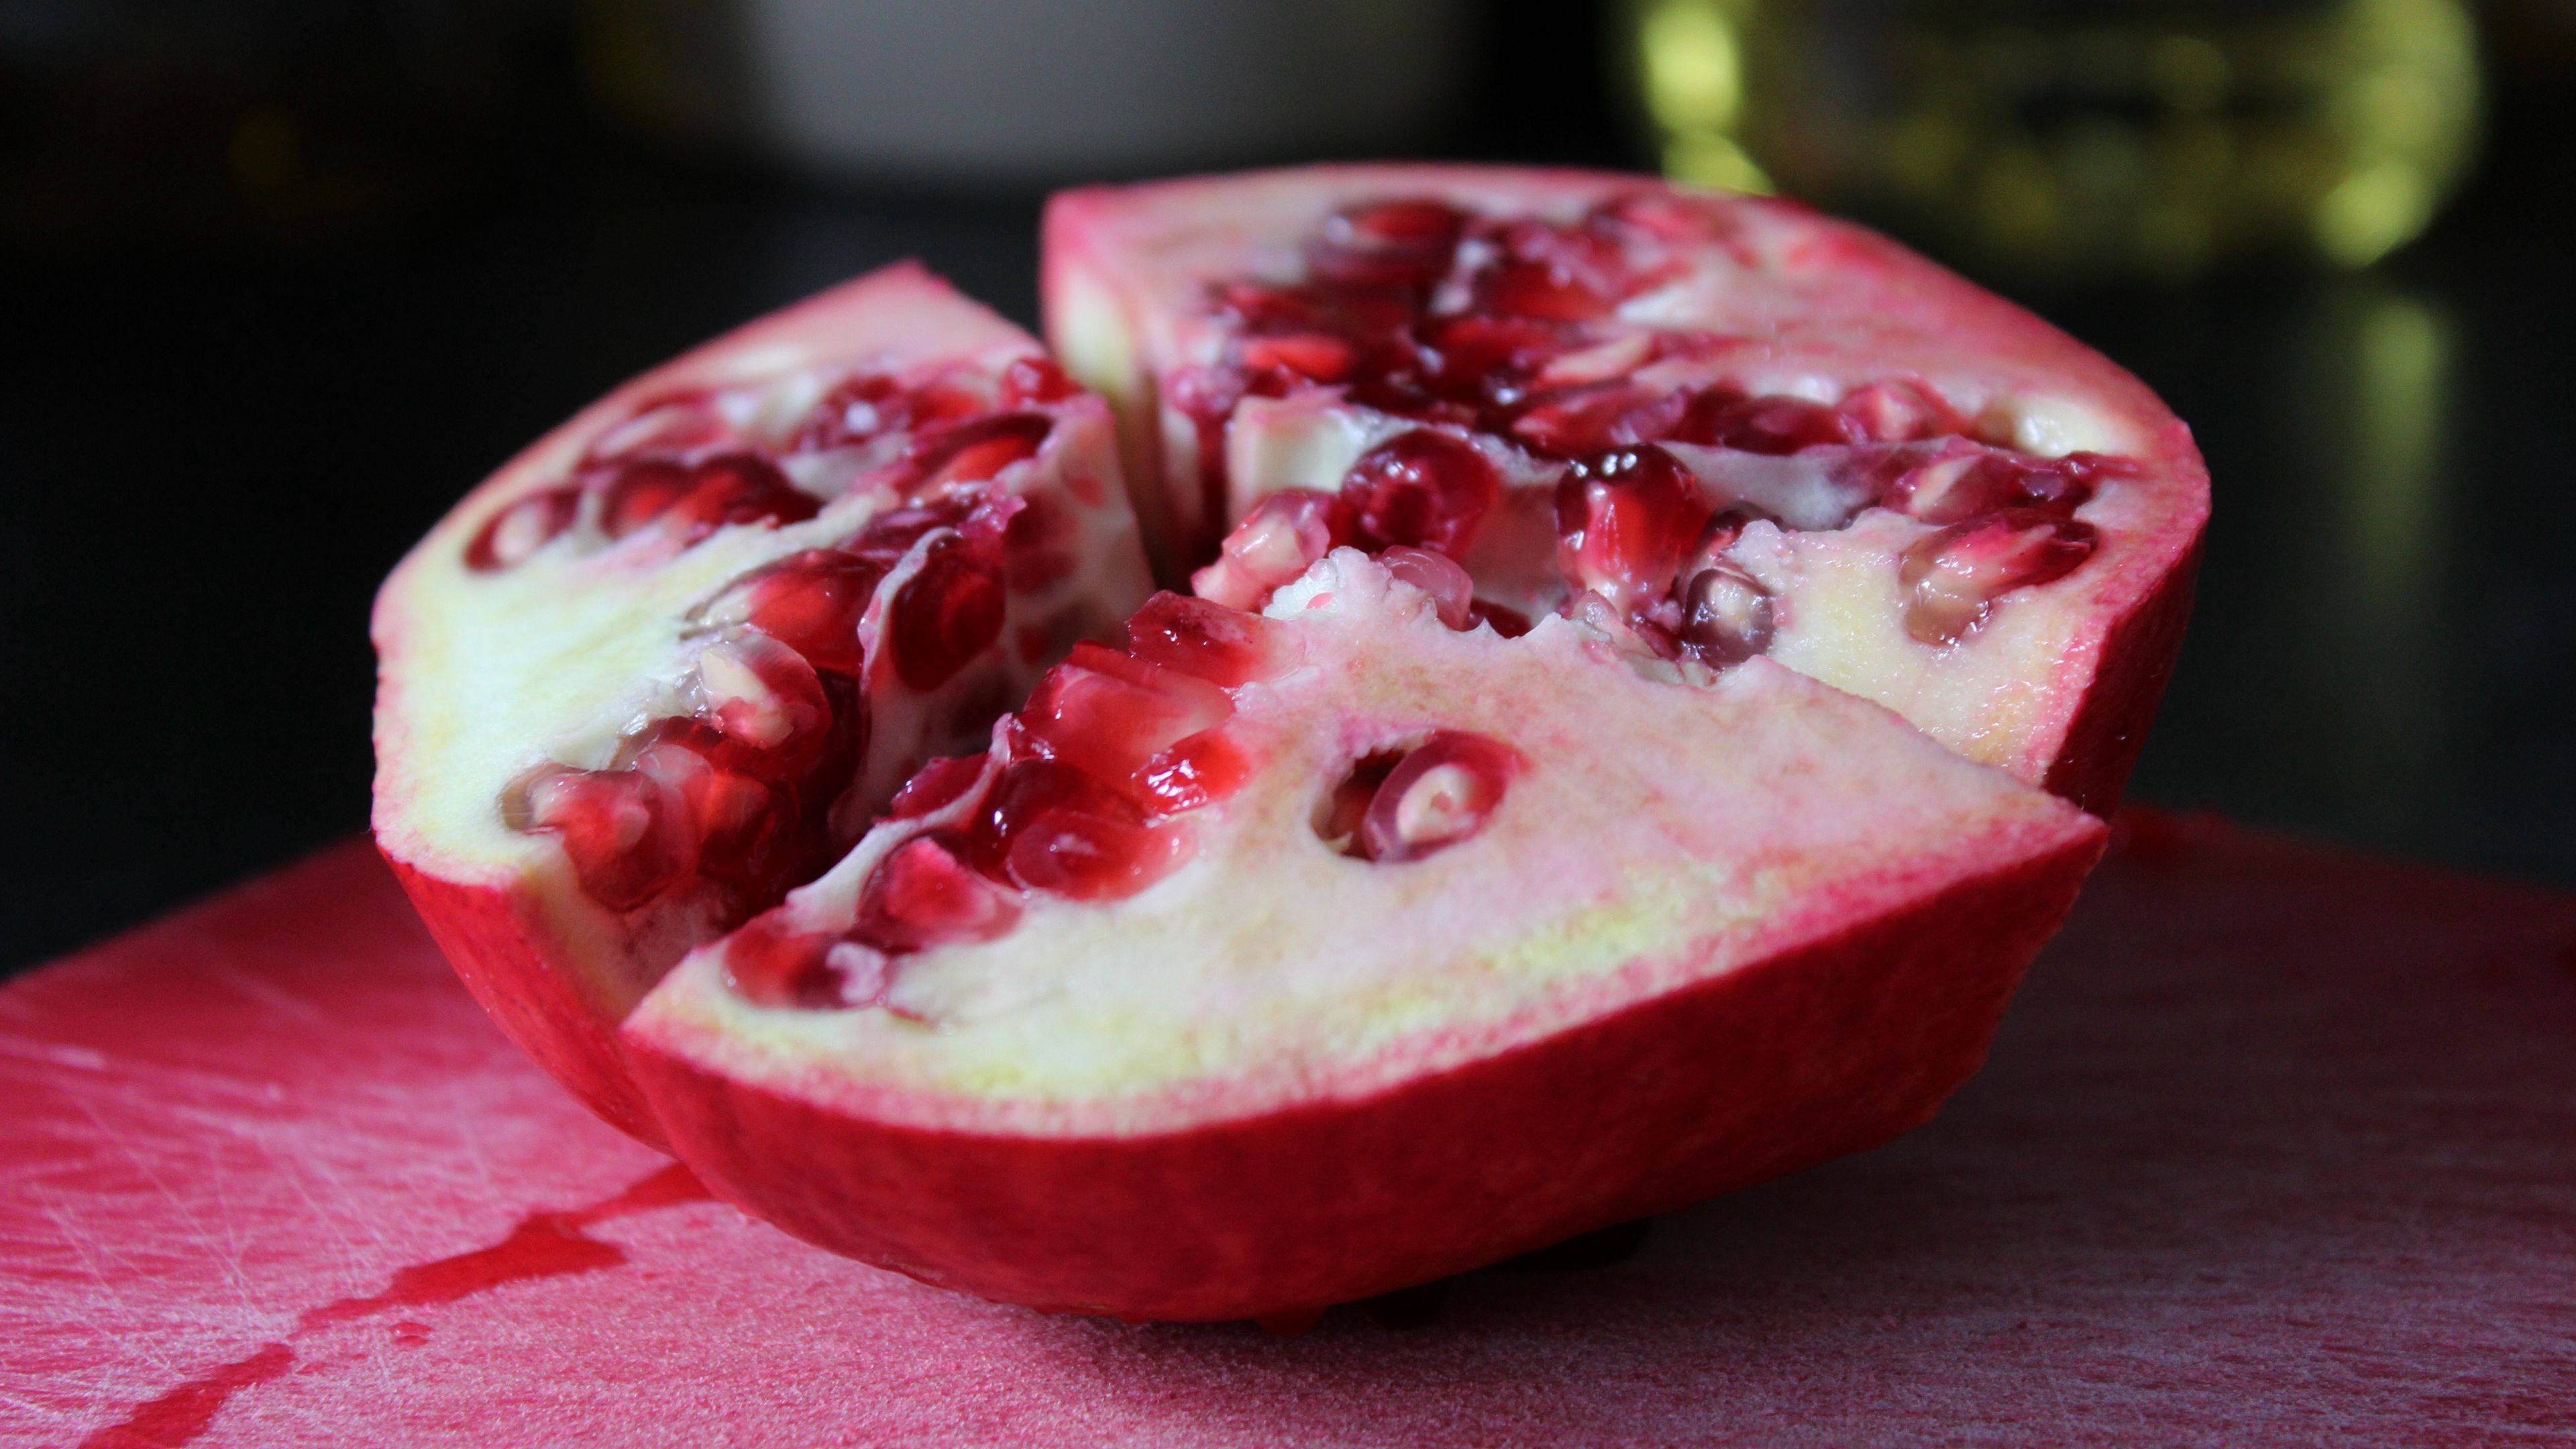 Download wallpaper 3840x2160 pomegranate, fruit, slice, juicy 4k uhd 16:9 HD background